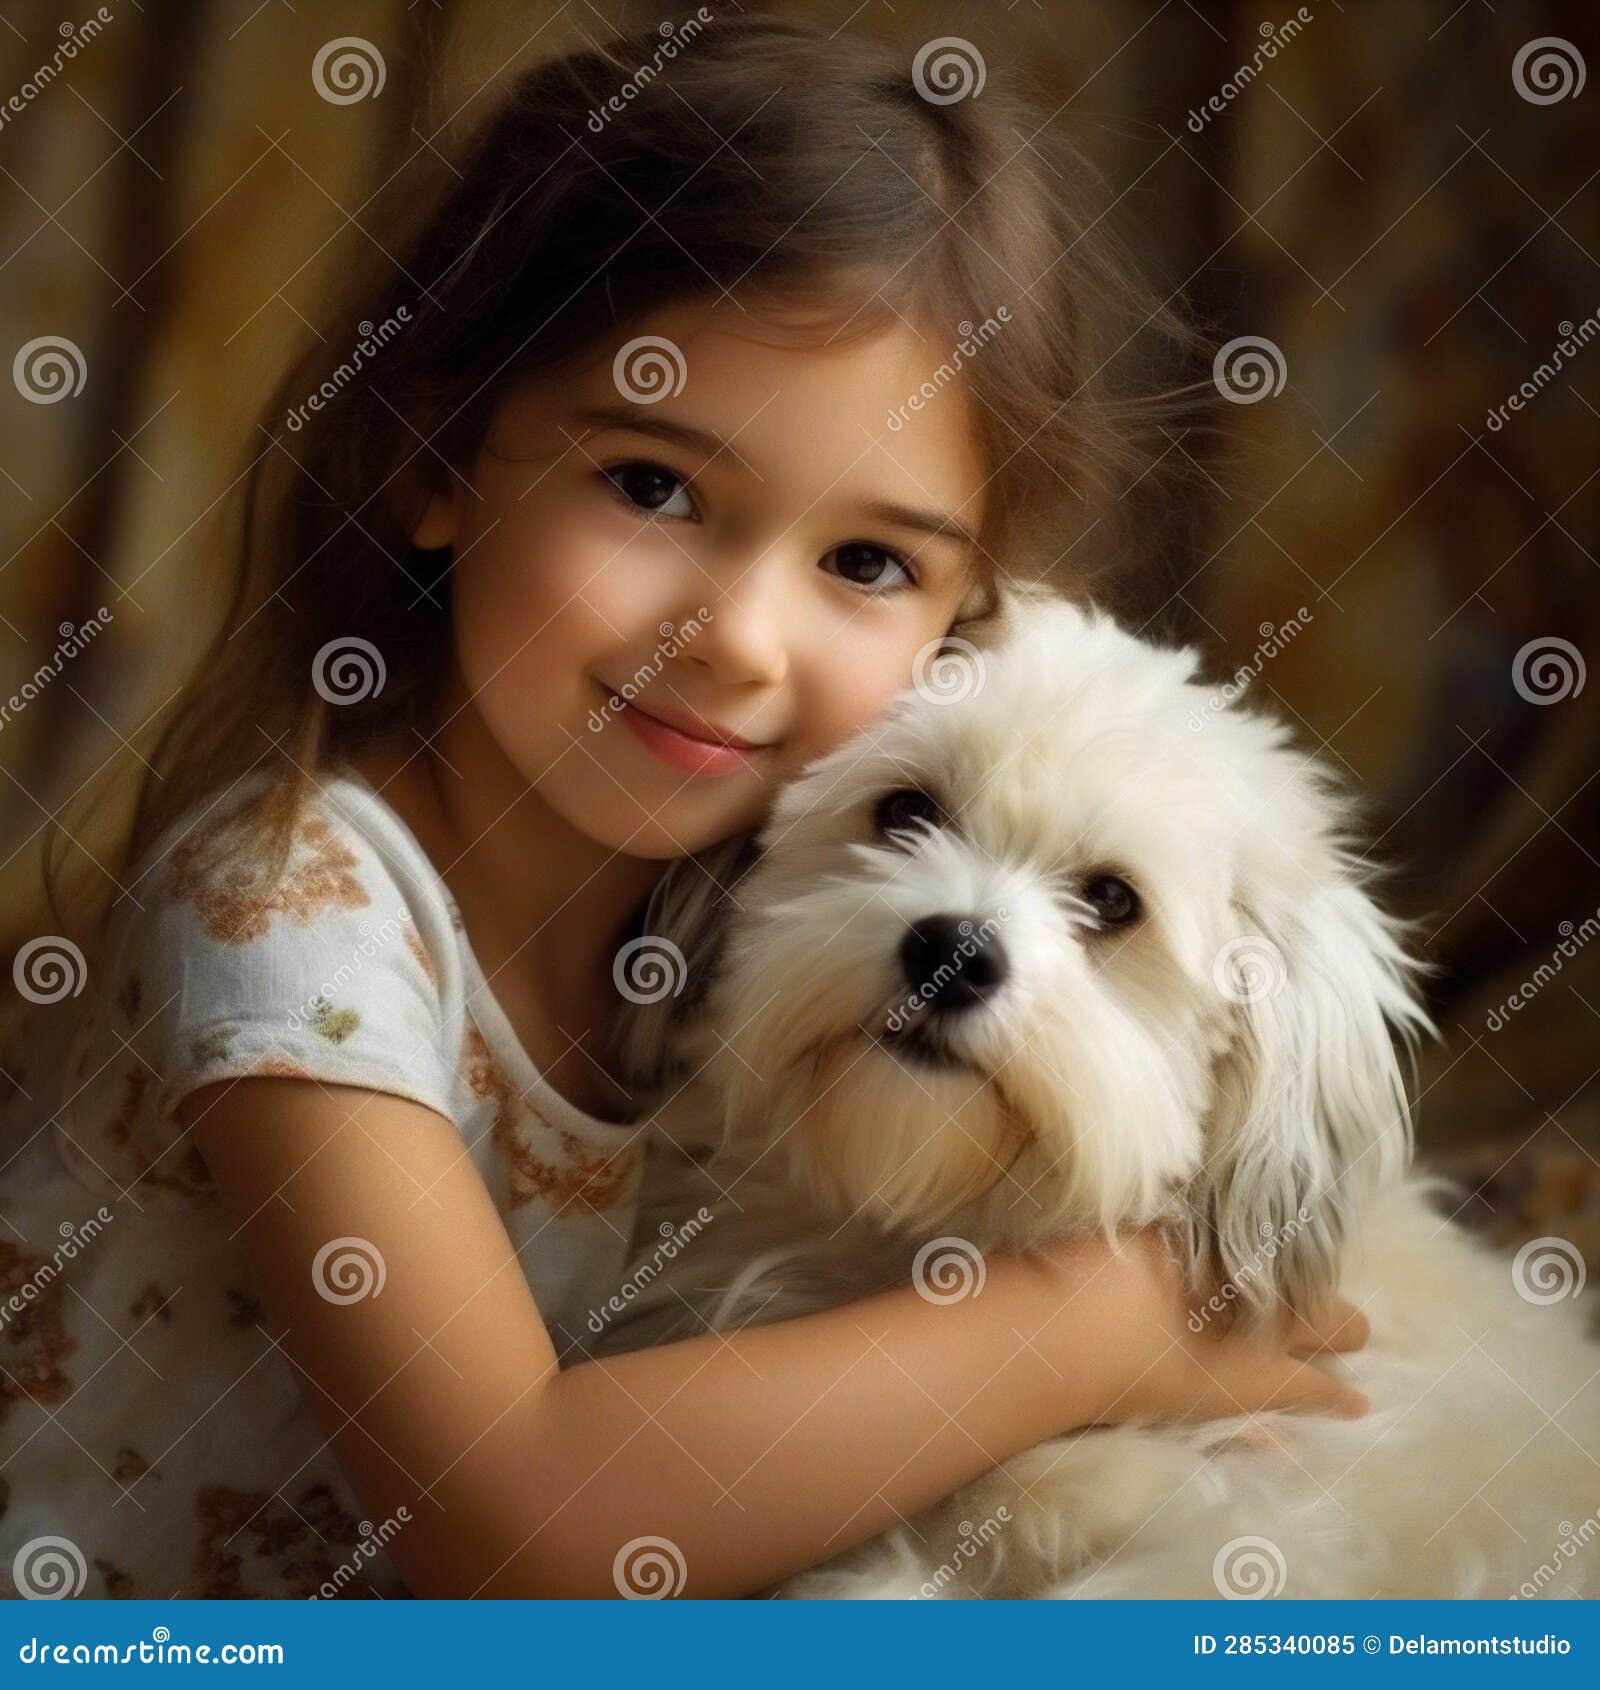 Peaple_girl_cuddling_with_her_dog1_4 Stock Illustration - Illustration ...